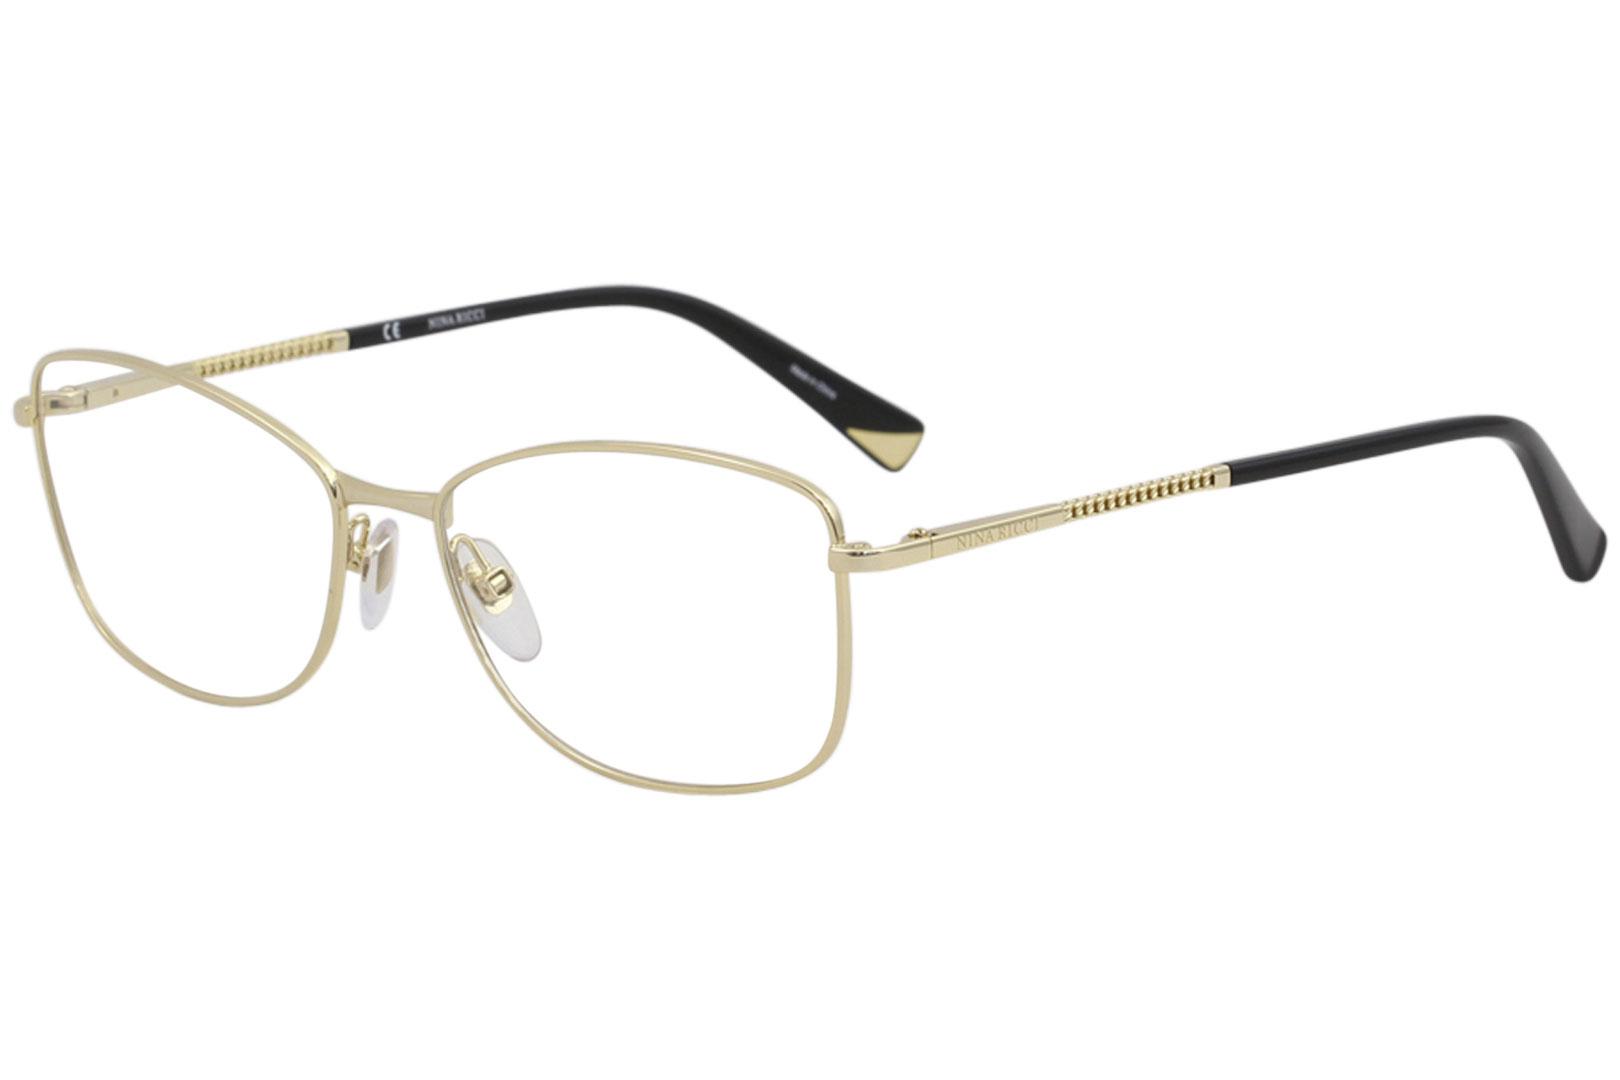 Nina Ricci Eyeglasses VNR084 VNR/084 0300 Shiny Gold Full Rim Optical Frame 54mm - Shiny Gold   0300 - Lens 54 Bridge 16 Temple 135mm